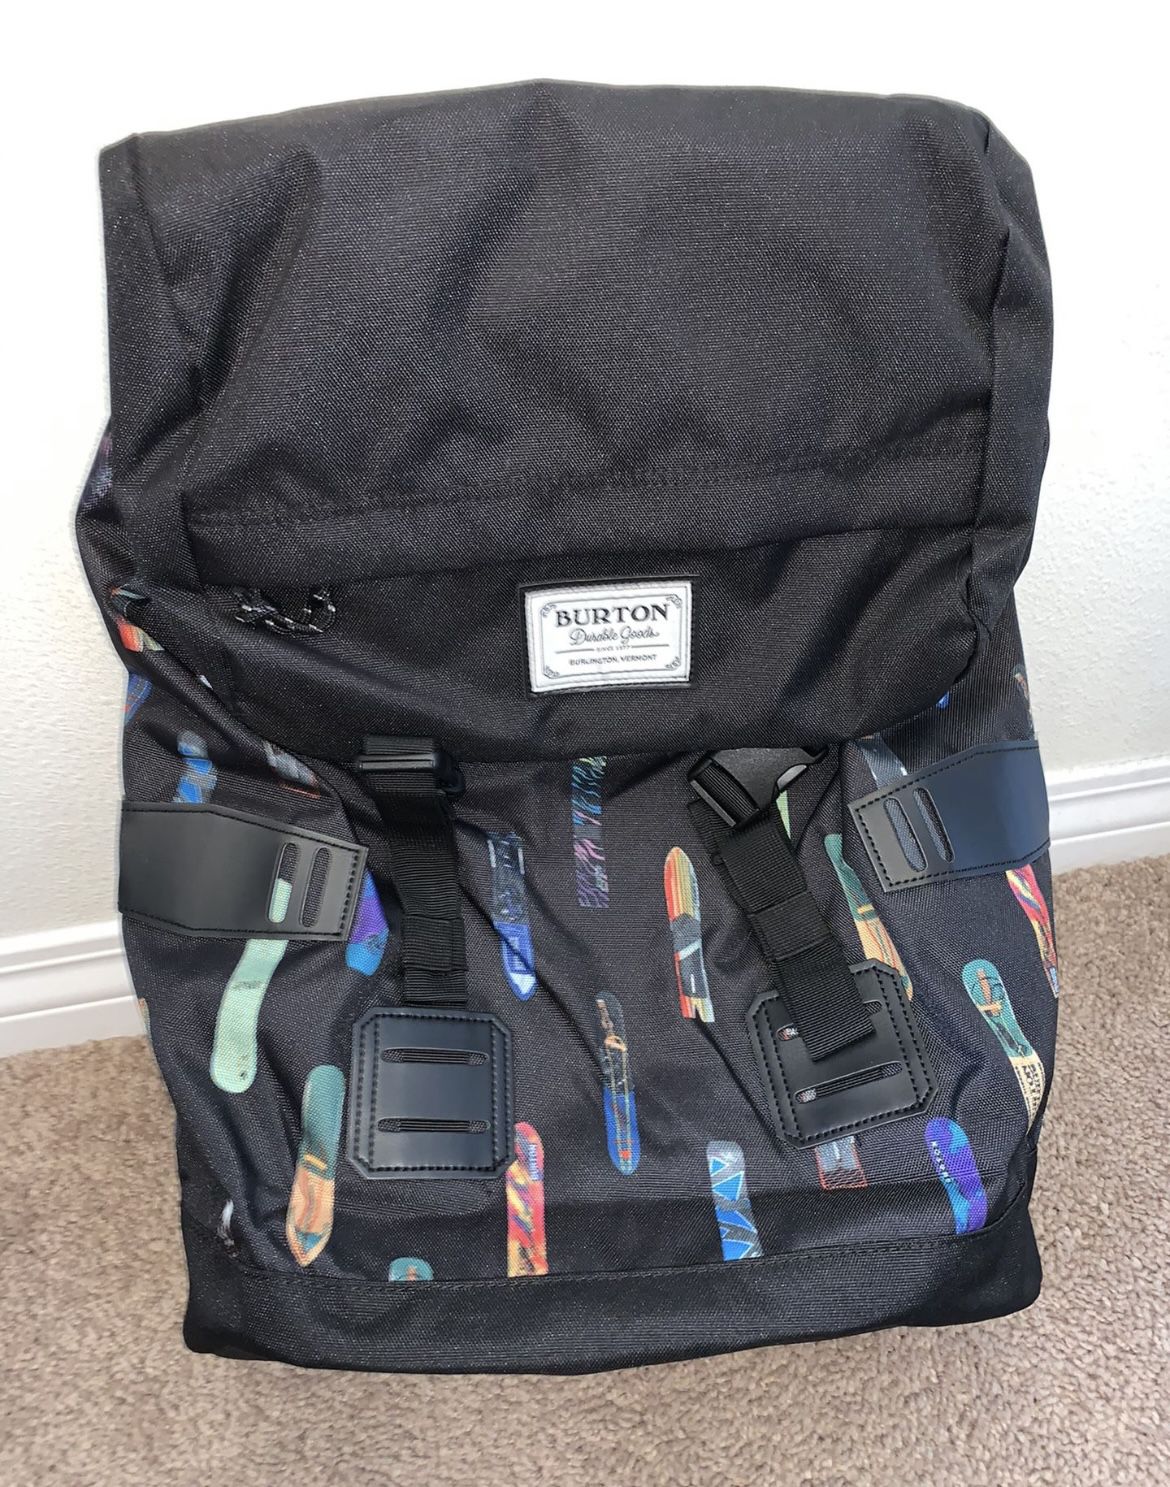 *BRAND NEW* Burton backpack